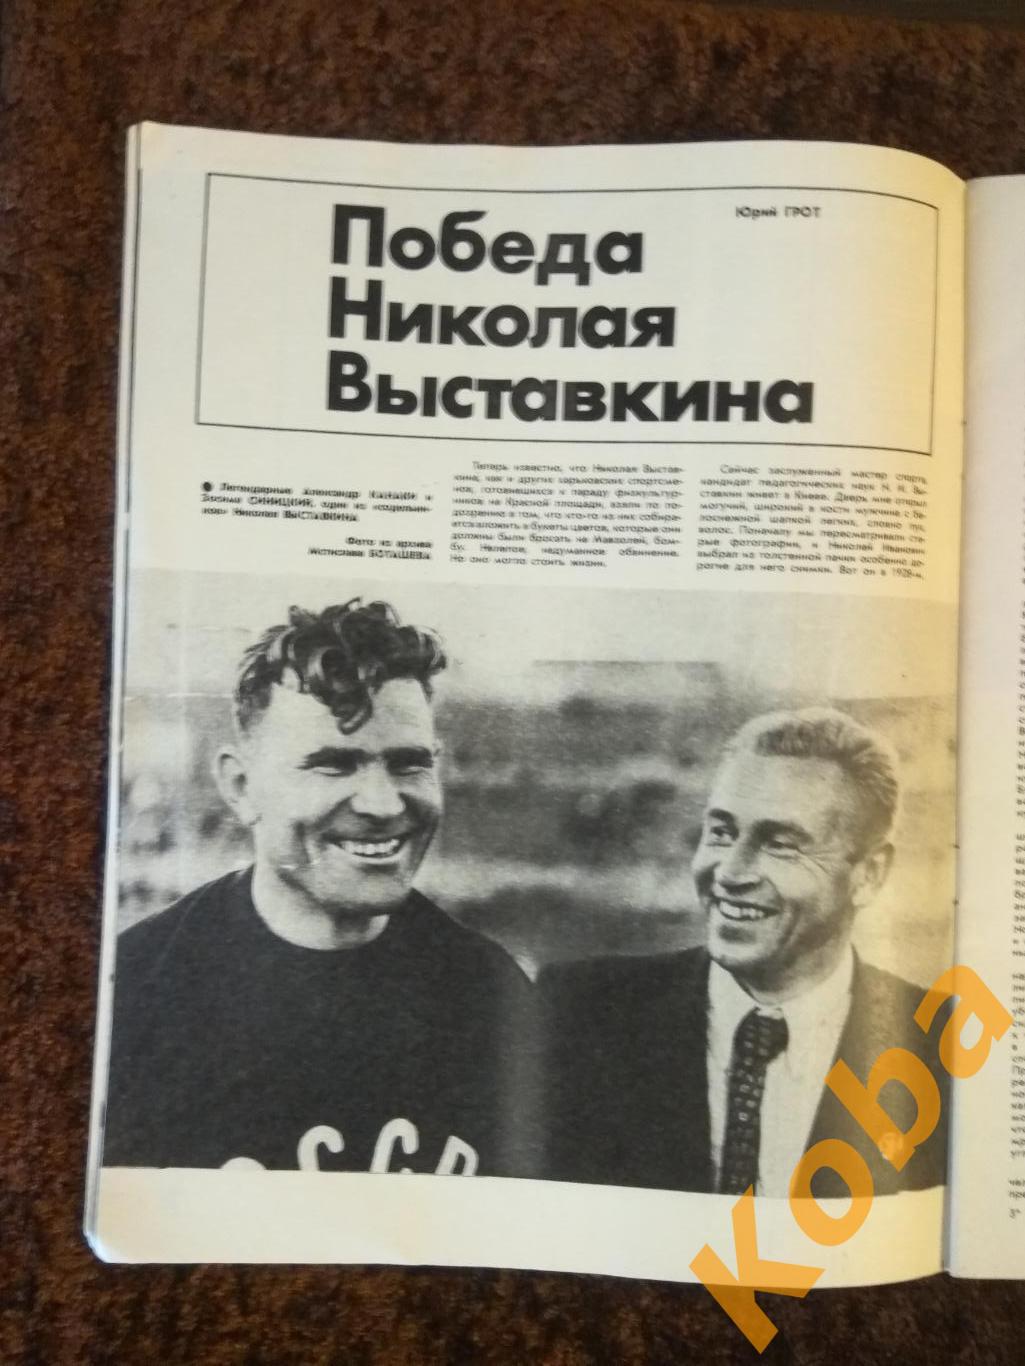 Физкультура и спорт 1989 №8 Баскетбол Александр Волков ЦСКА Бокс Олимпиада 1988 5